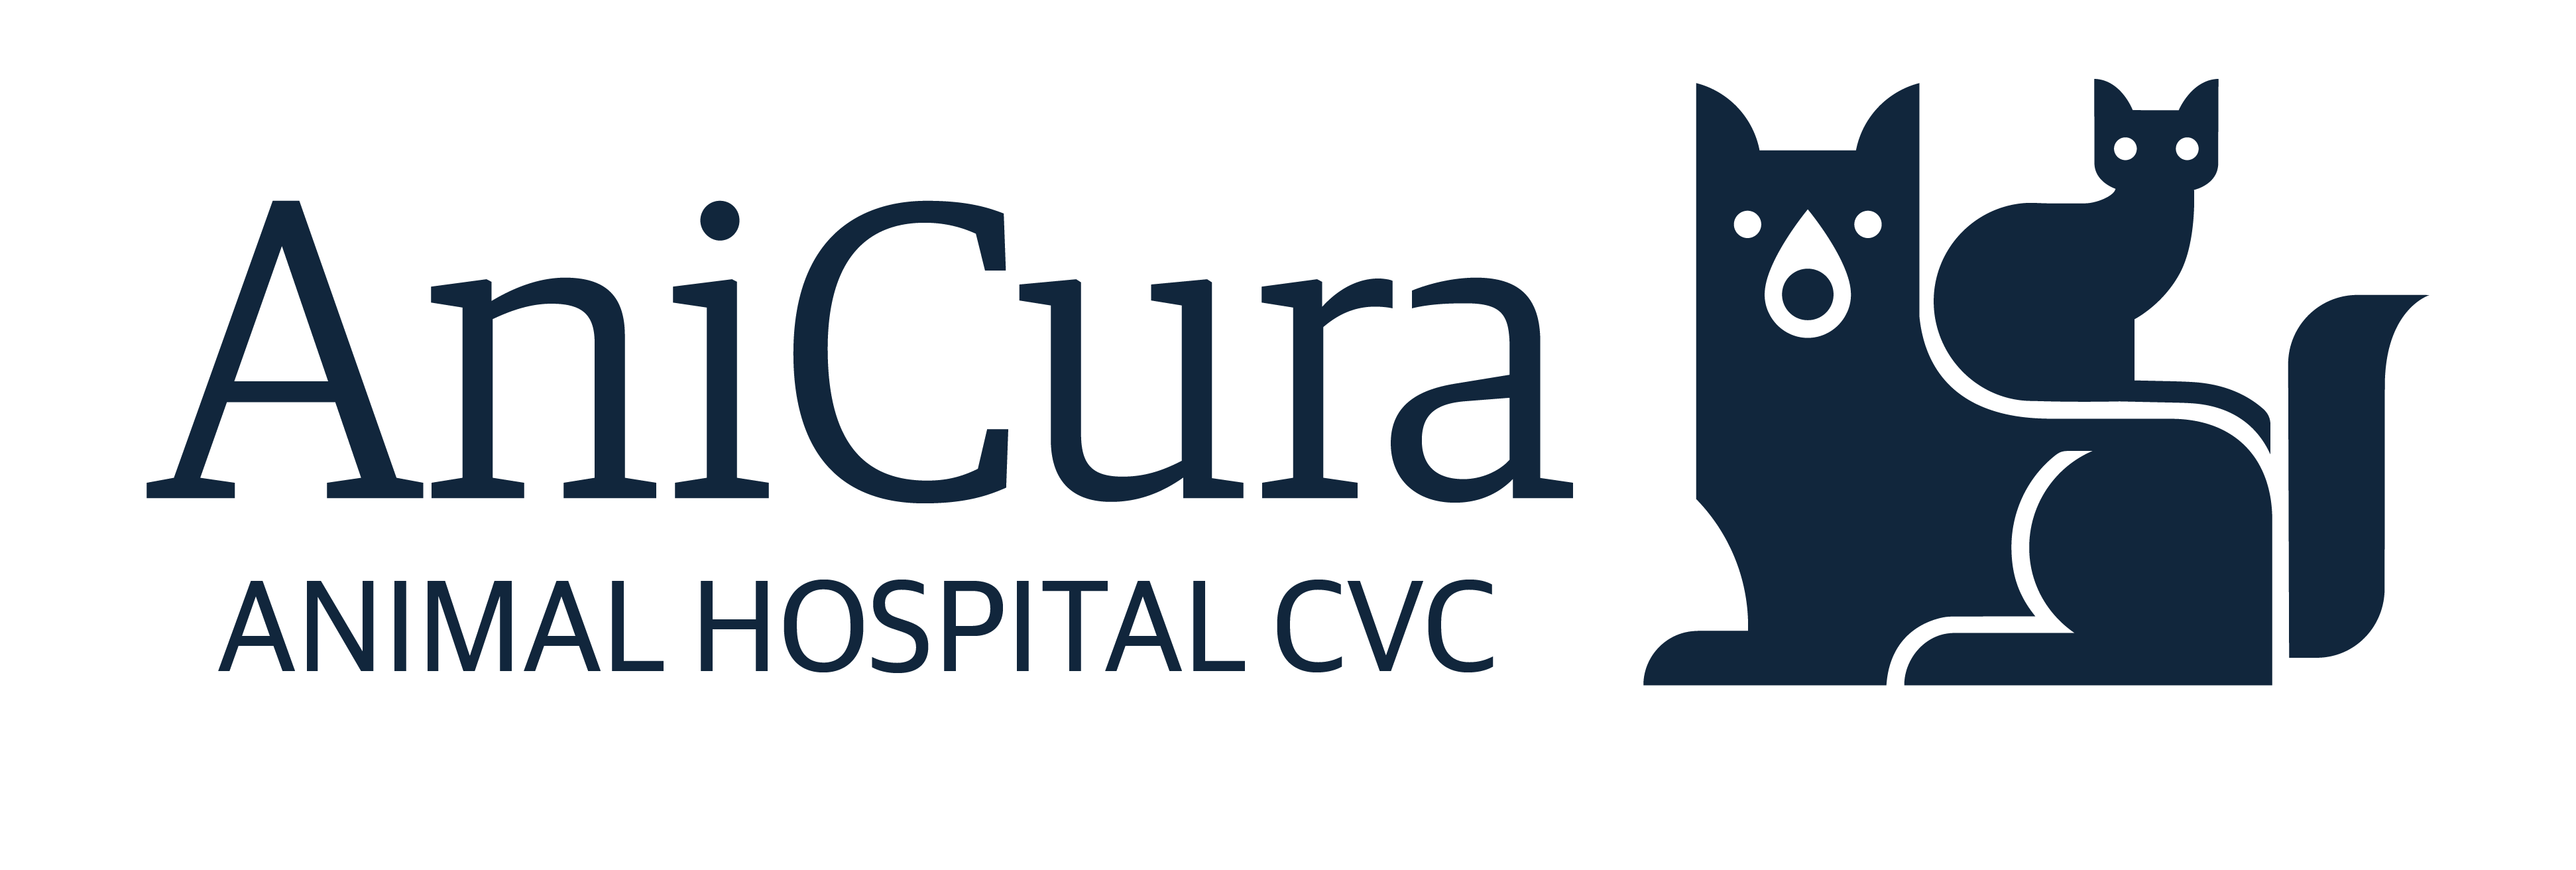 Animal Hospital CVC logo